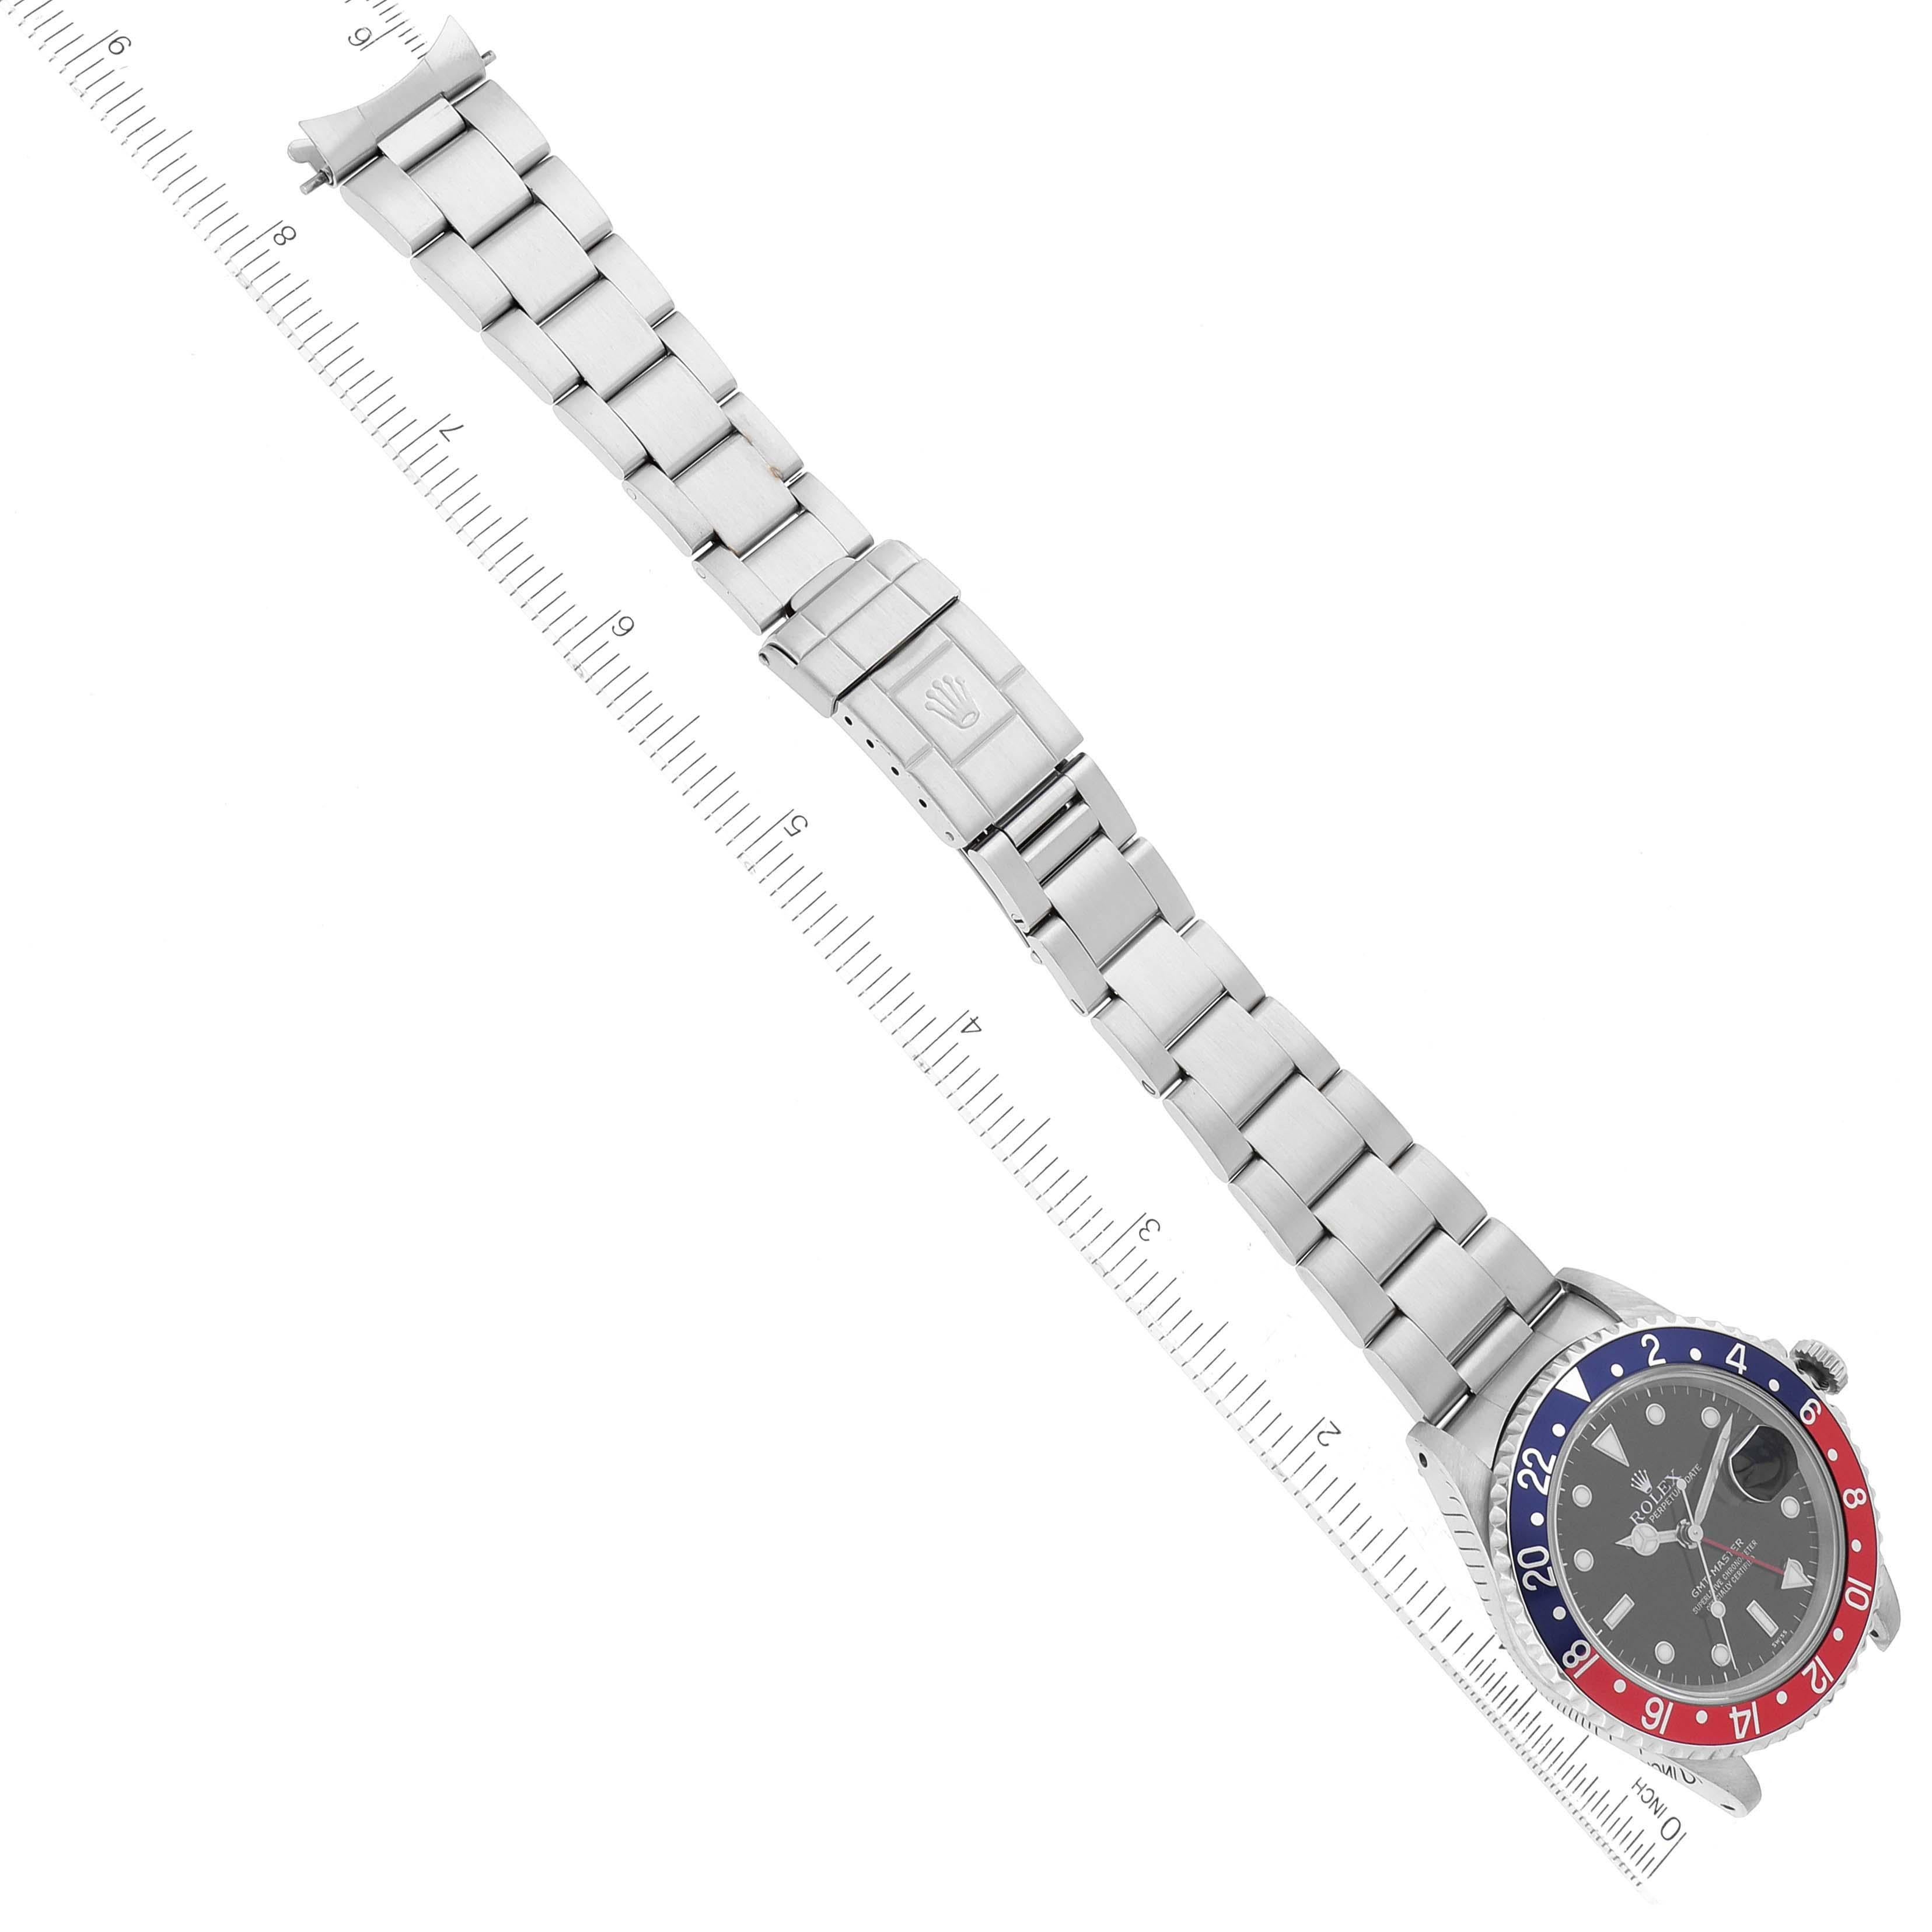 Rolex GMT Master 40mm Blue Red Pepsi Bezel Steel Mens Watch 16700 4